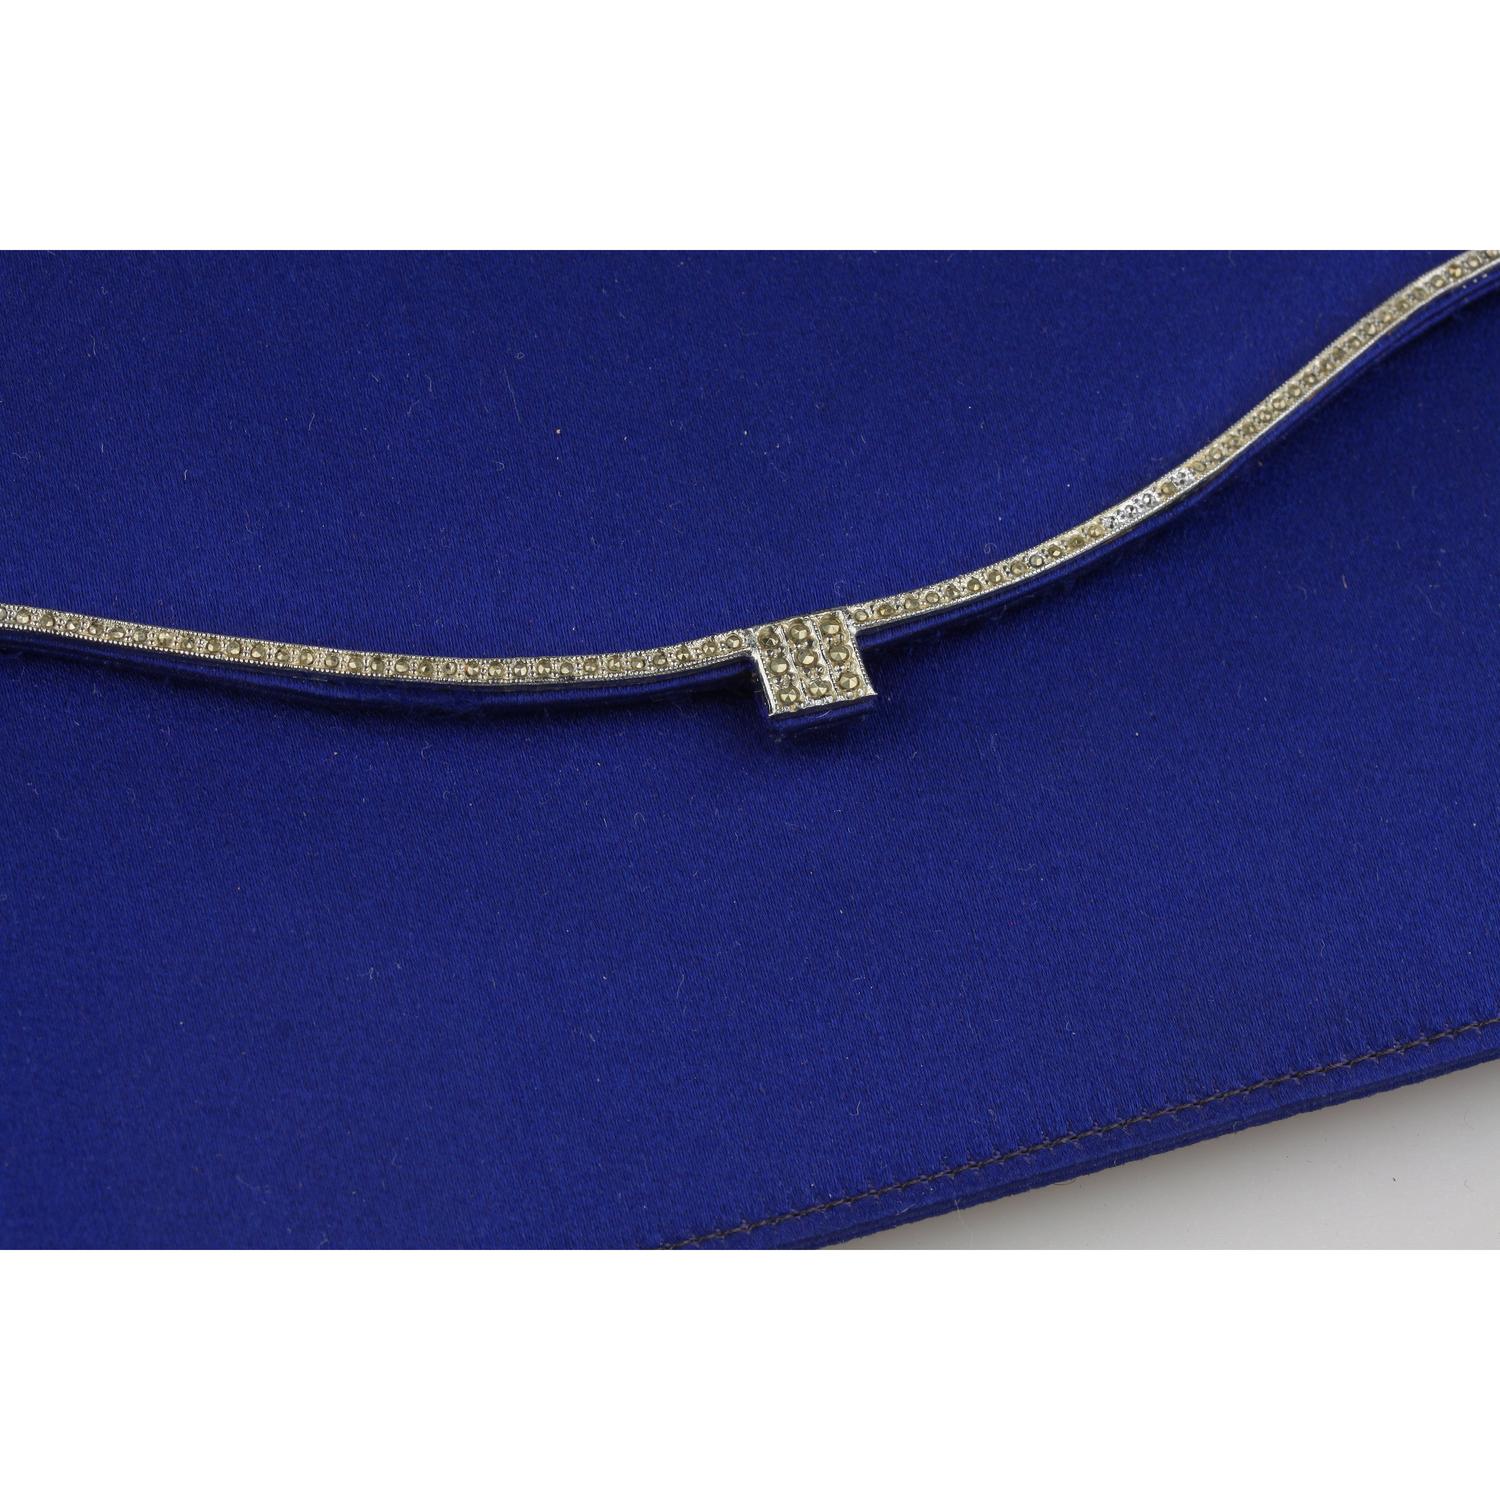 Gucci Vintage Blue Satin Clutch Evening Bag with Rhinestones 1